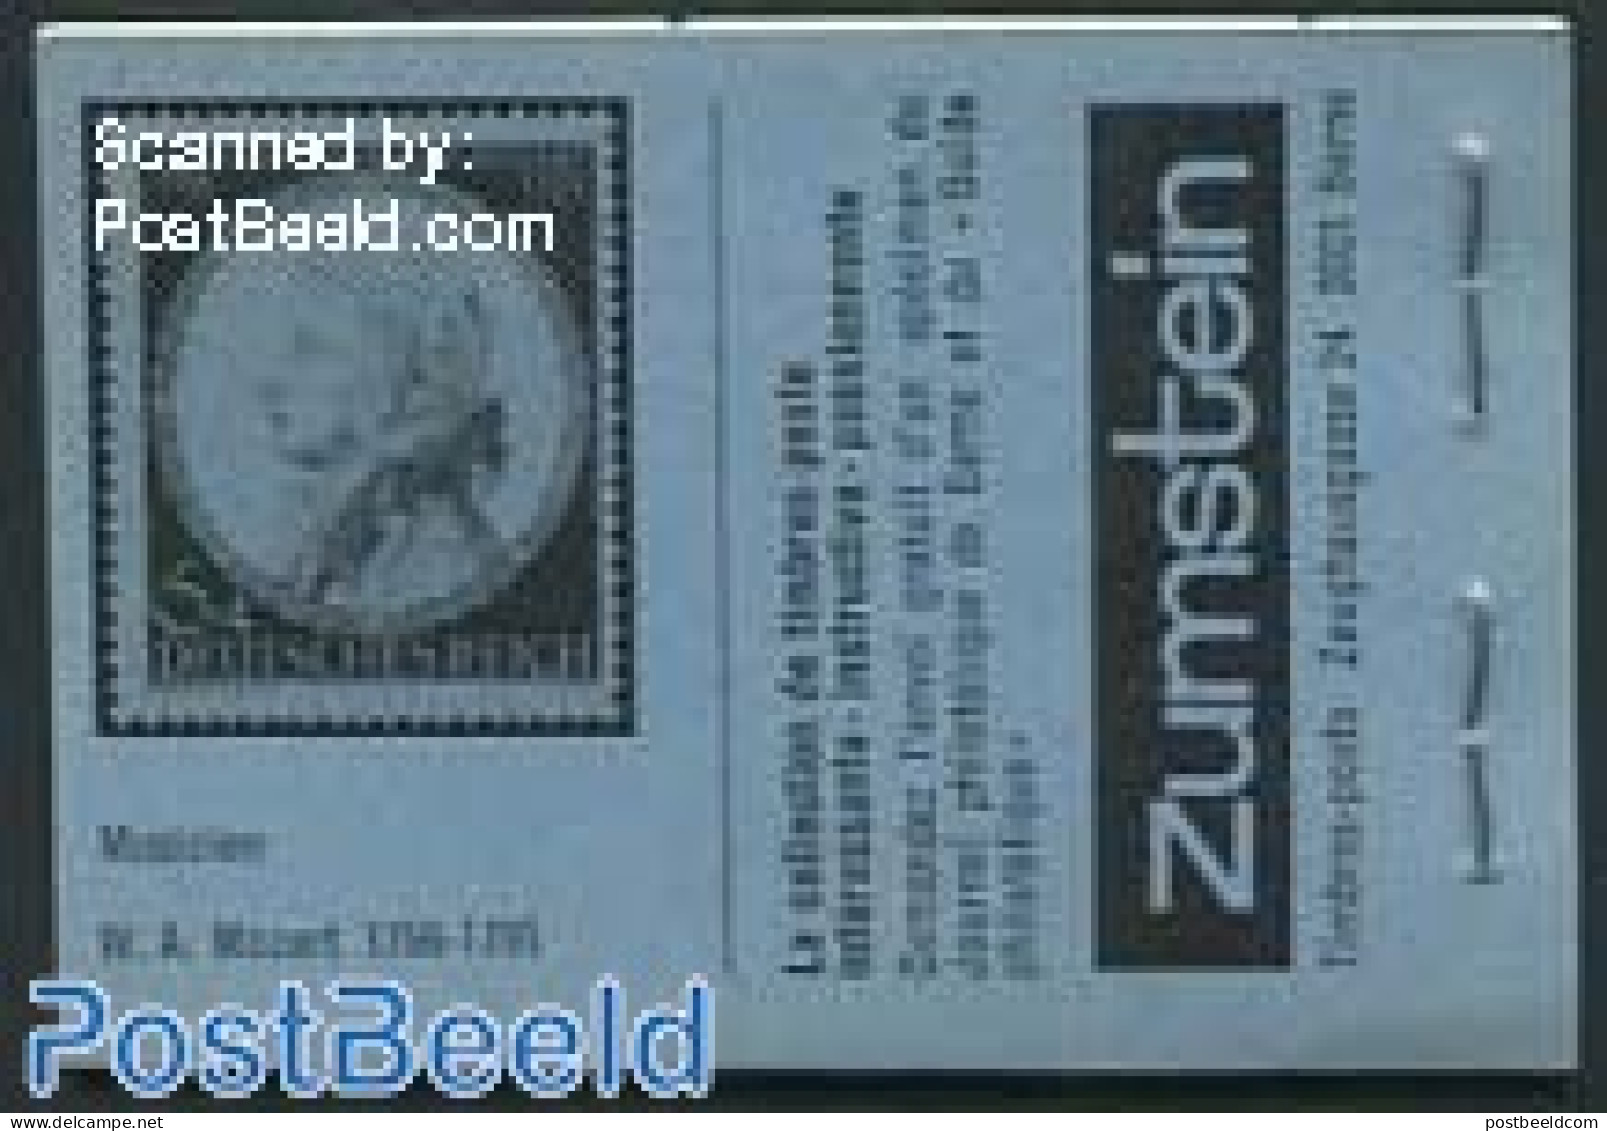 Switzerland 1980 Folklore Booklet, Blue Cover, Mozart F, Mint NH, Performance Art - Various - Amadeus Mozart - Stamp B.. - Ungebraucht